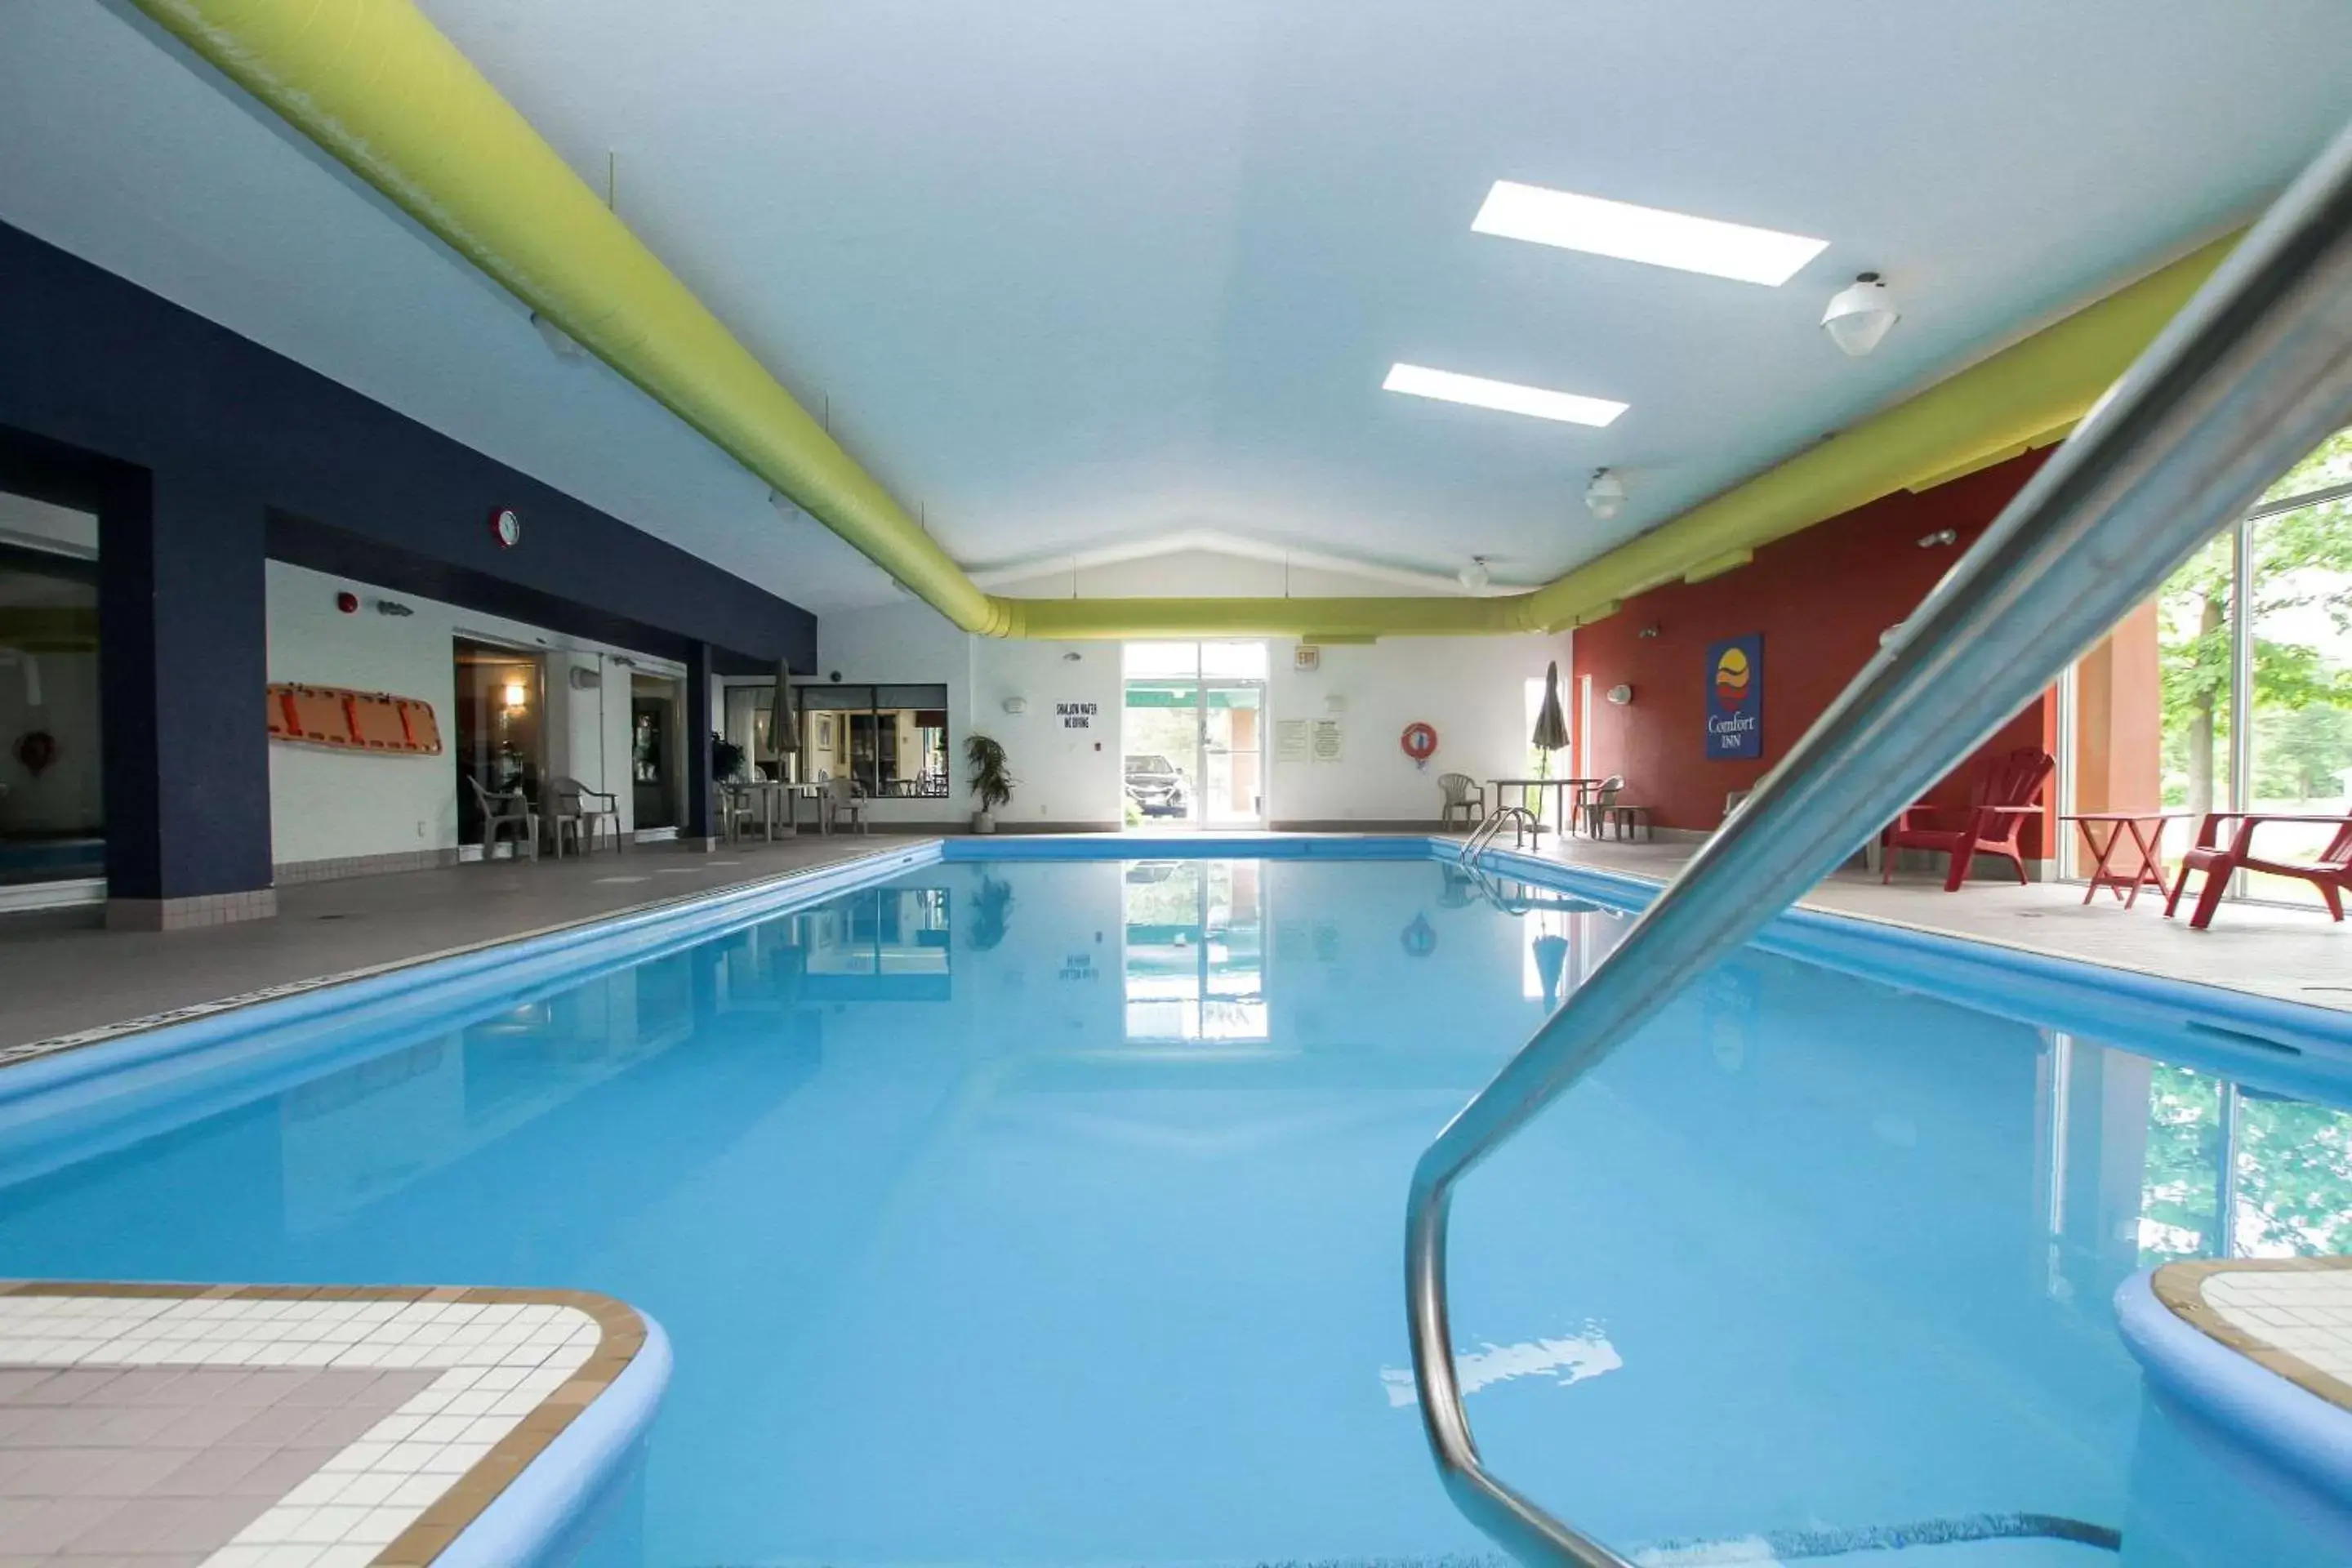 On site, Swimming Pool in Comfort Inn Cornwall